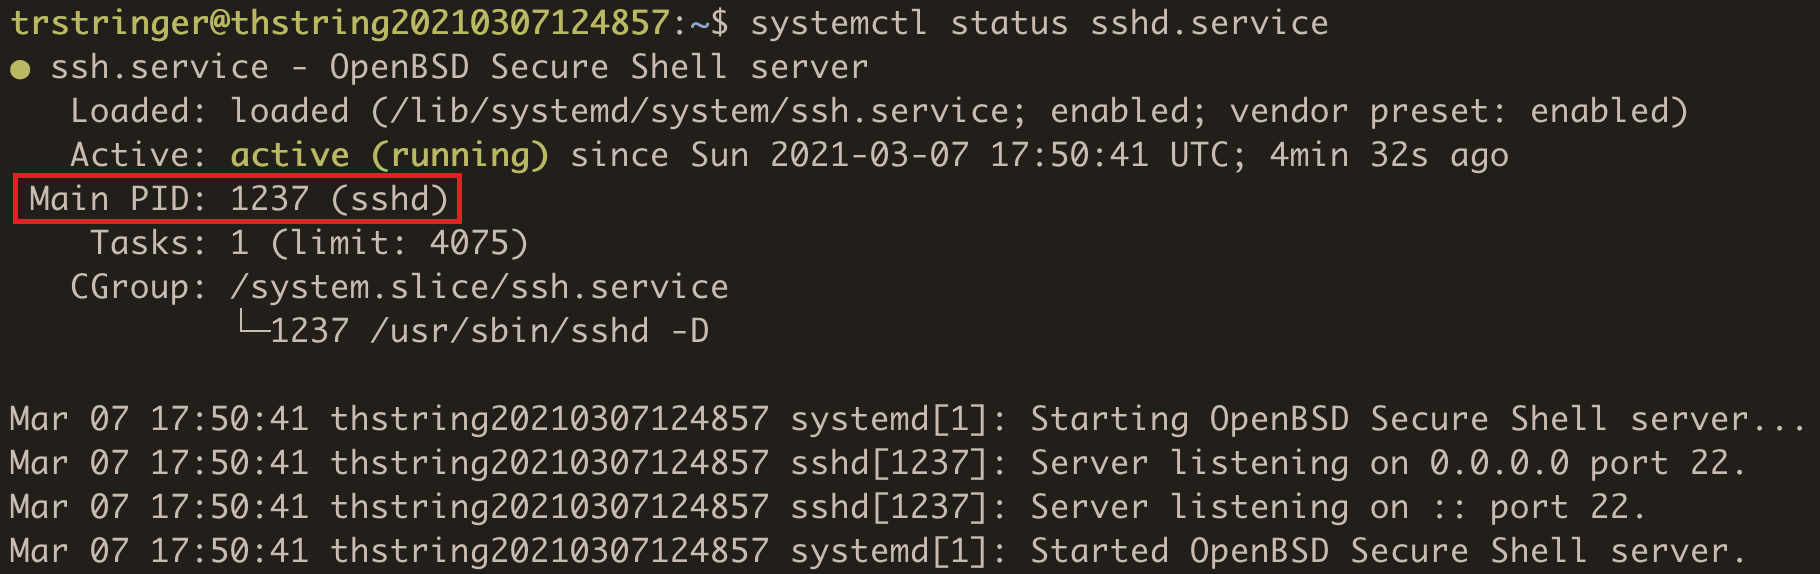 ssh.service status pid